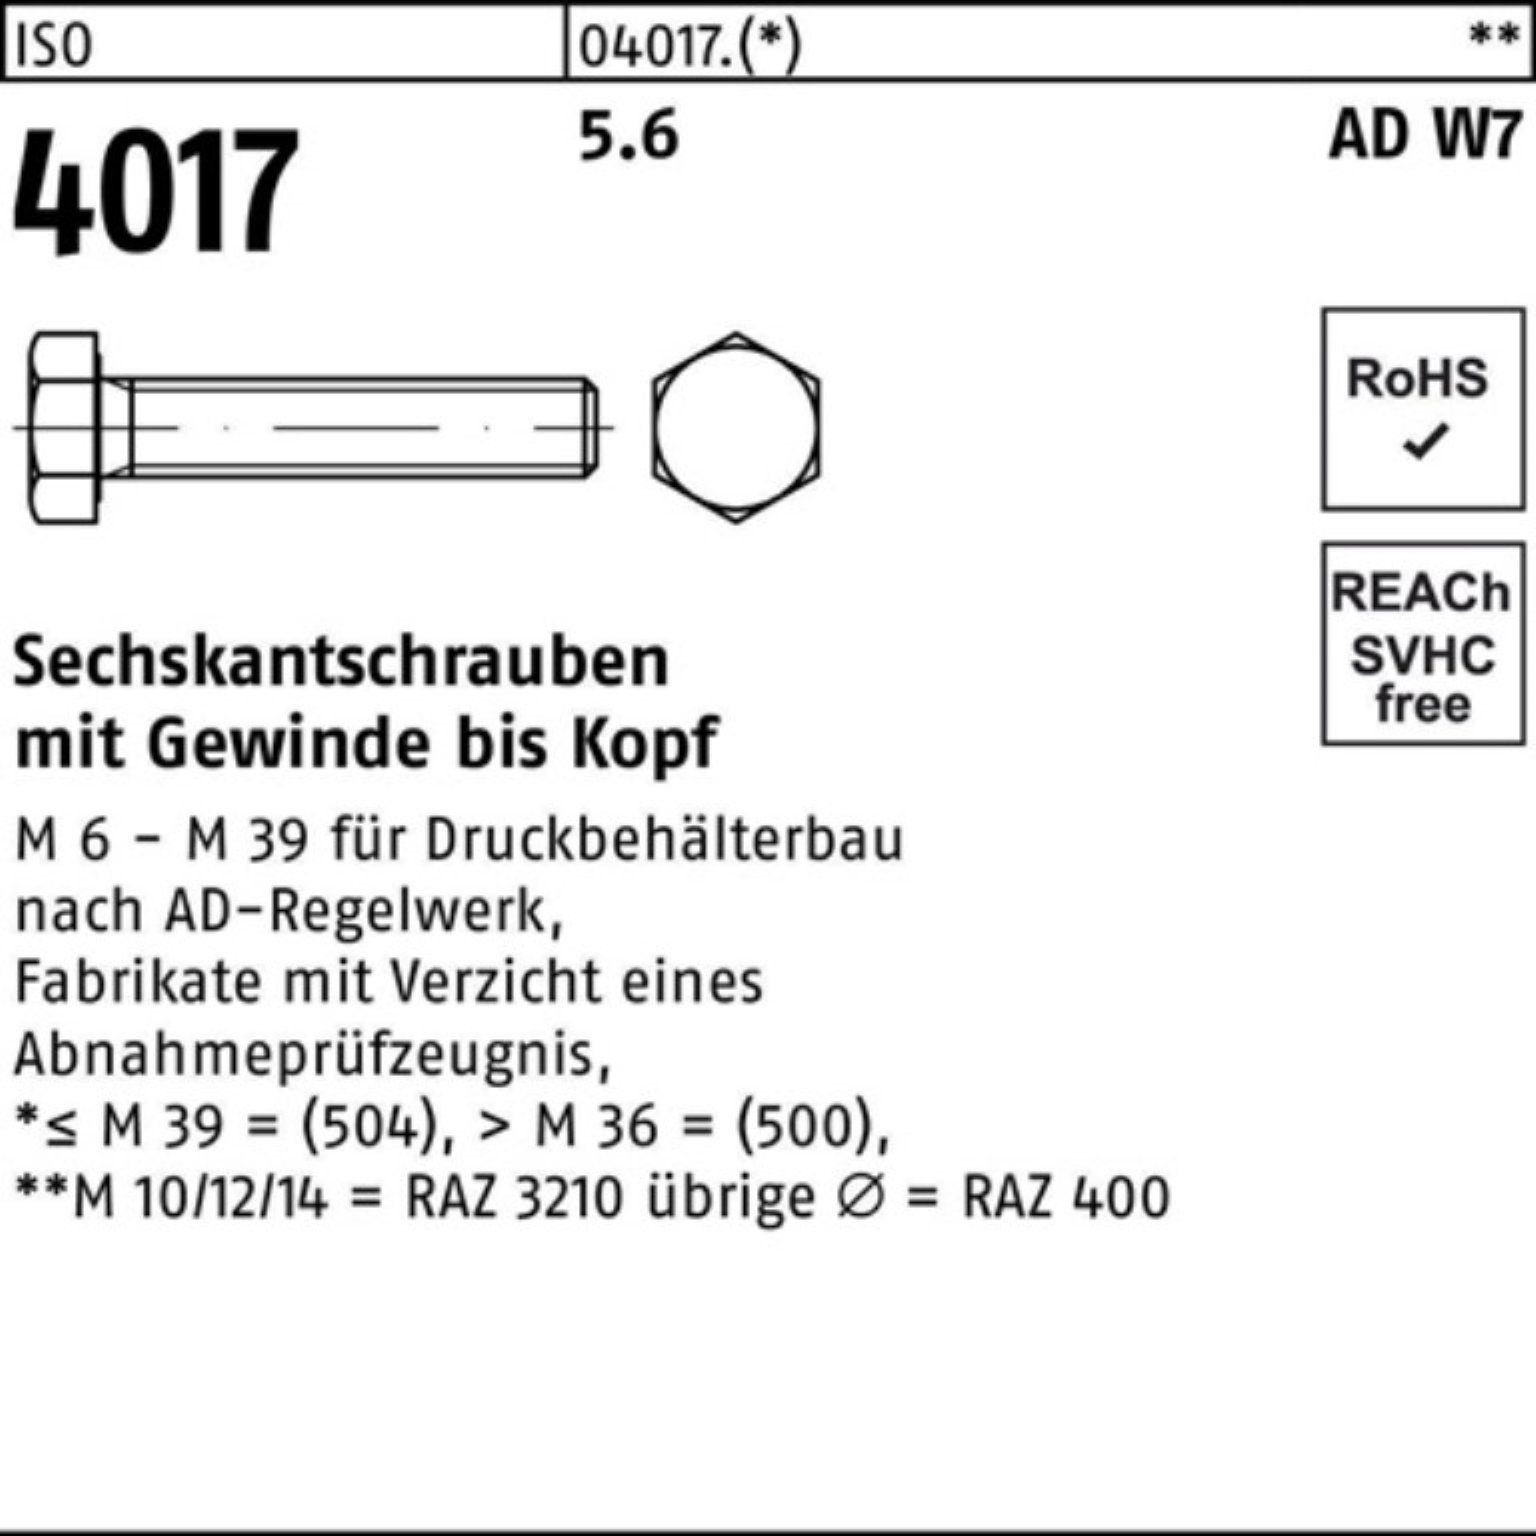 W7 Sechskantschraube 50 VG 5.6 ISO AD Sechskantschraube 4017 Pack 100er 1 Bufab IS Stück M27x